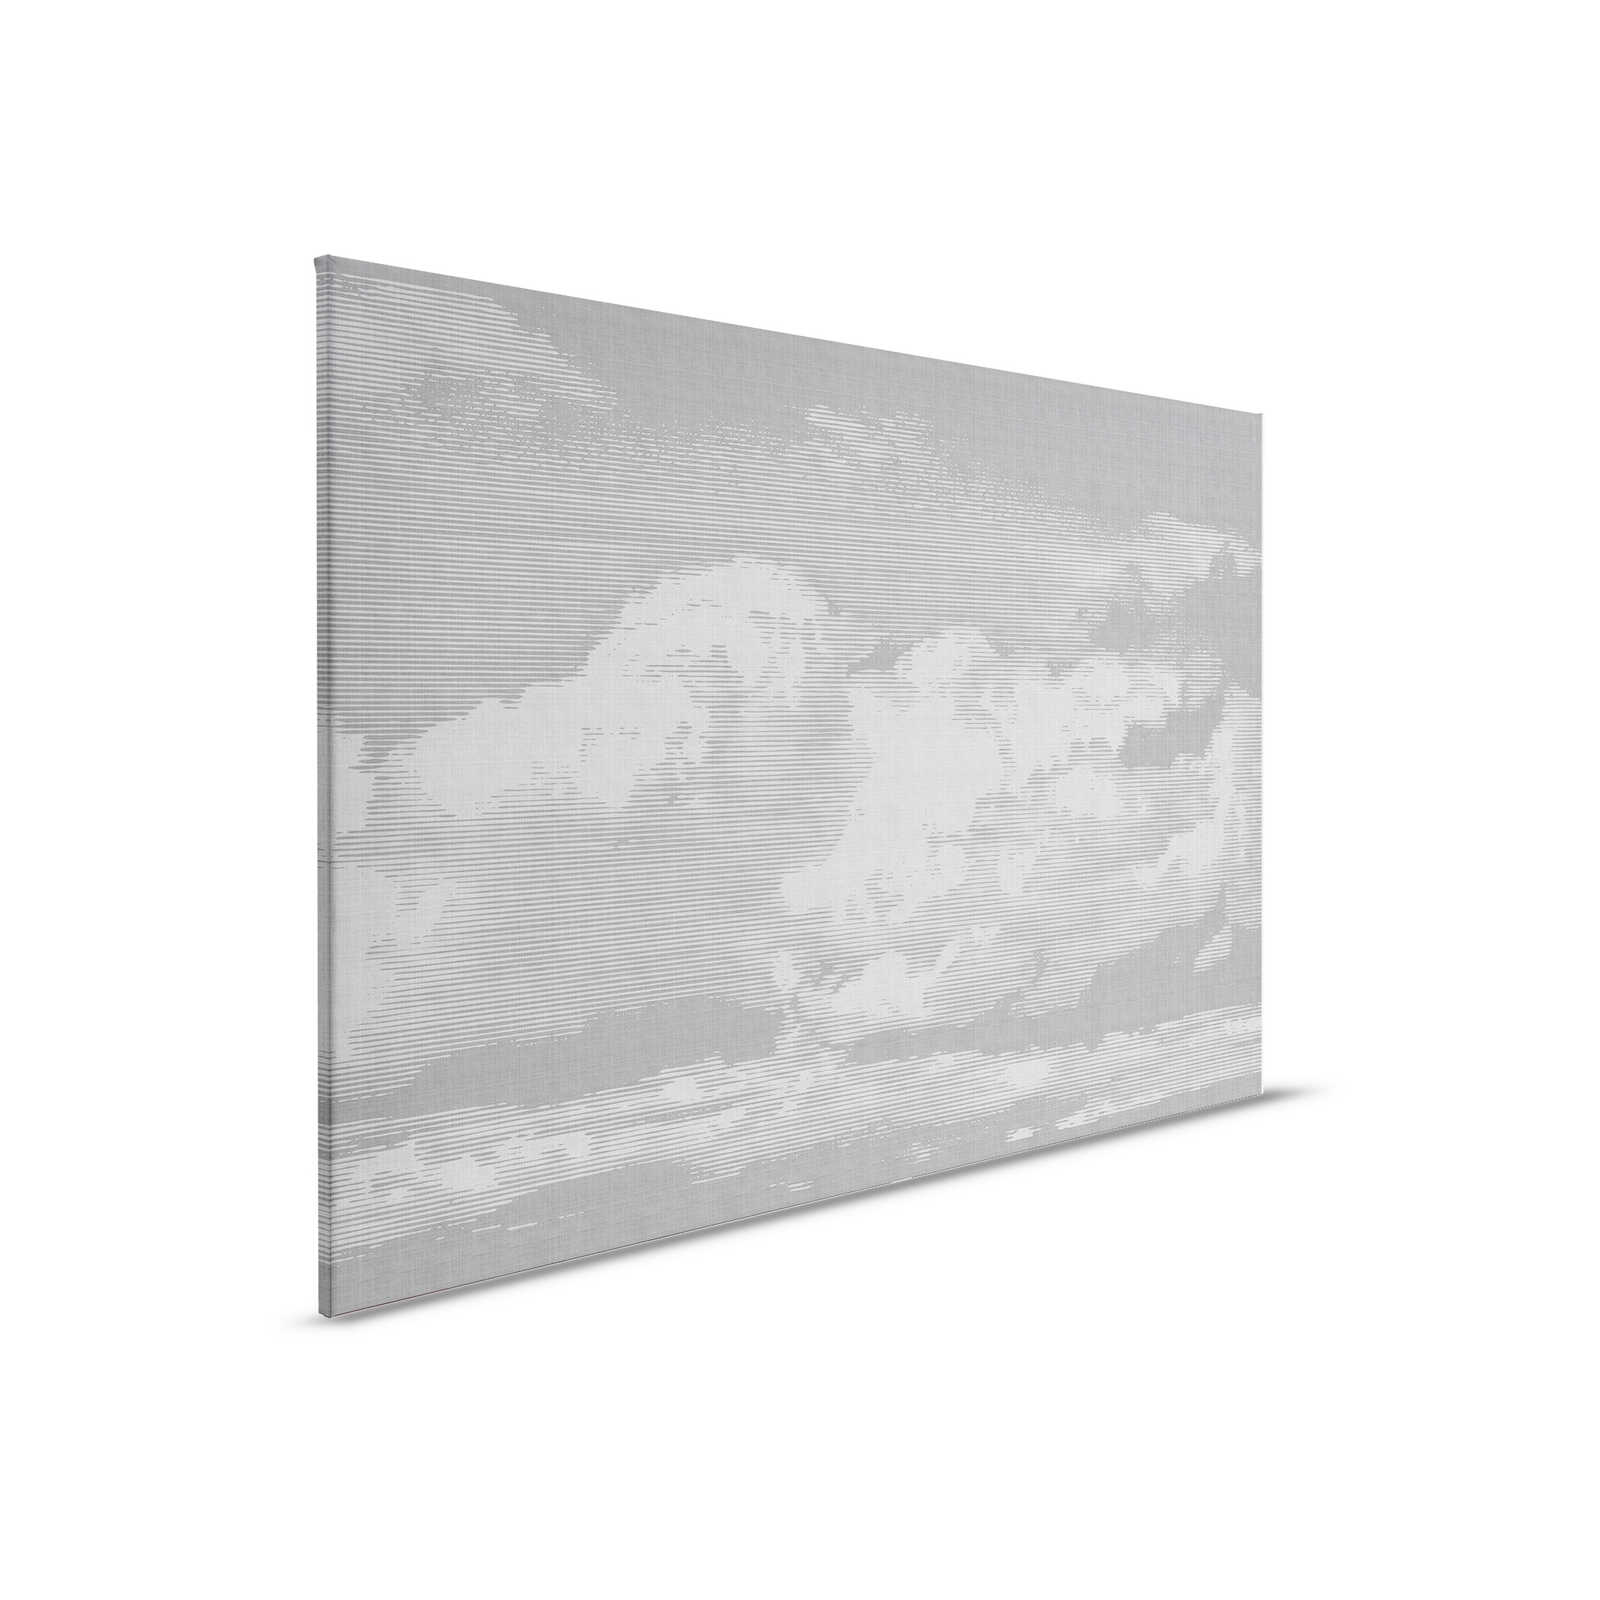 Nubes 2 - Cuadro de lienzo celestial en aspecto de lino natural con motivo de nubes - 0,90 m x 0,60 m
